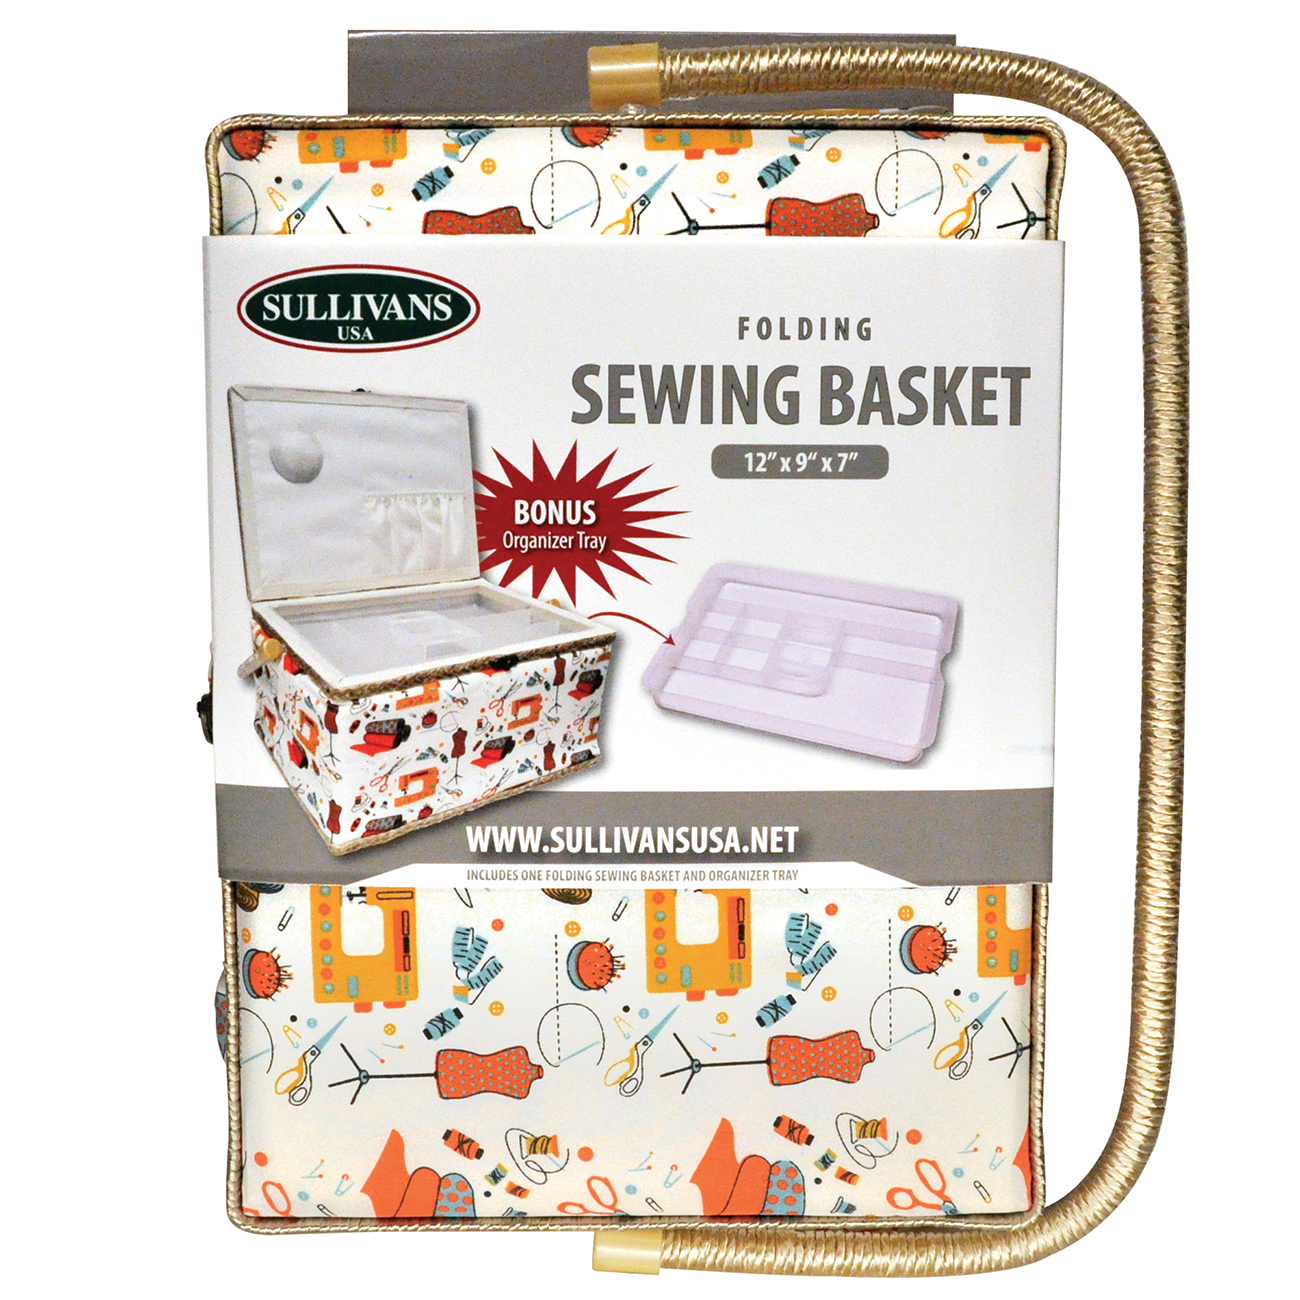 Folding Sewing Basket - Sullivans USA